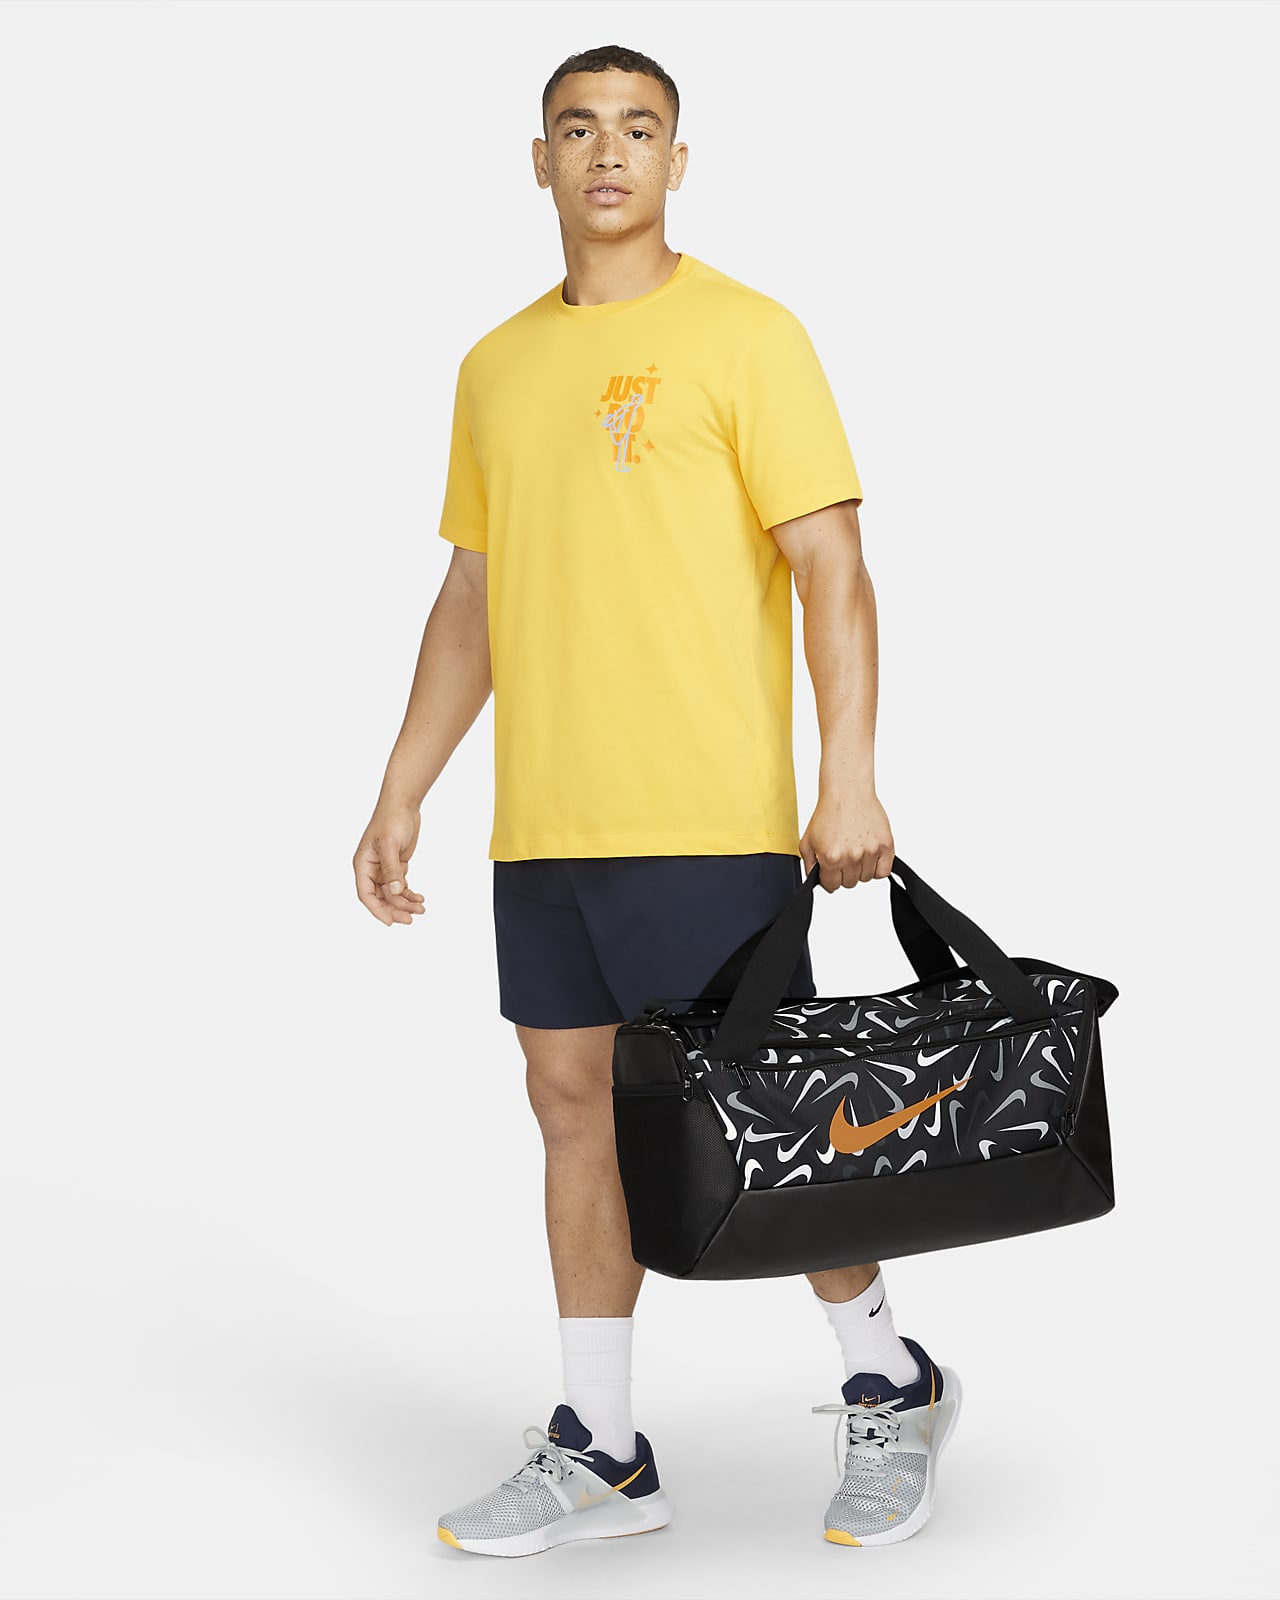 Nike Unisex Brasilia Printed Duffel Bag (Small,41L) - Iron Grey, Men's  Fashion, Bags, Briefcases on Carousell